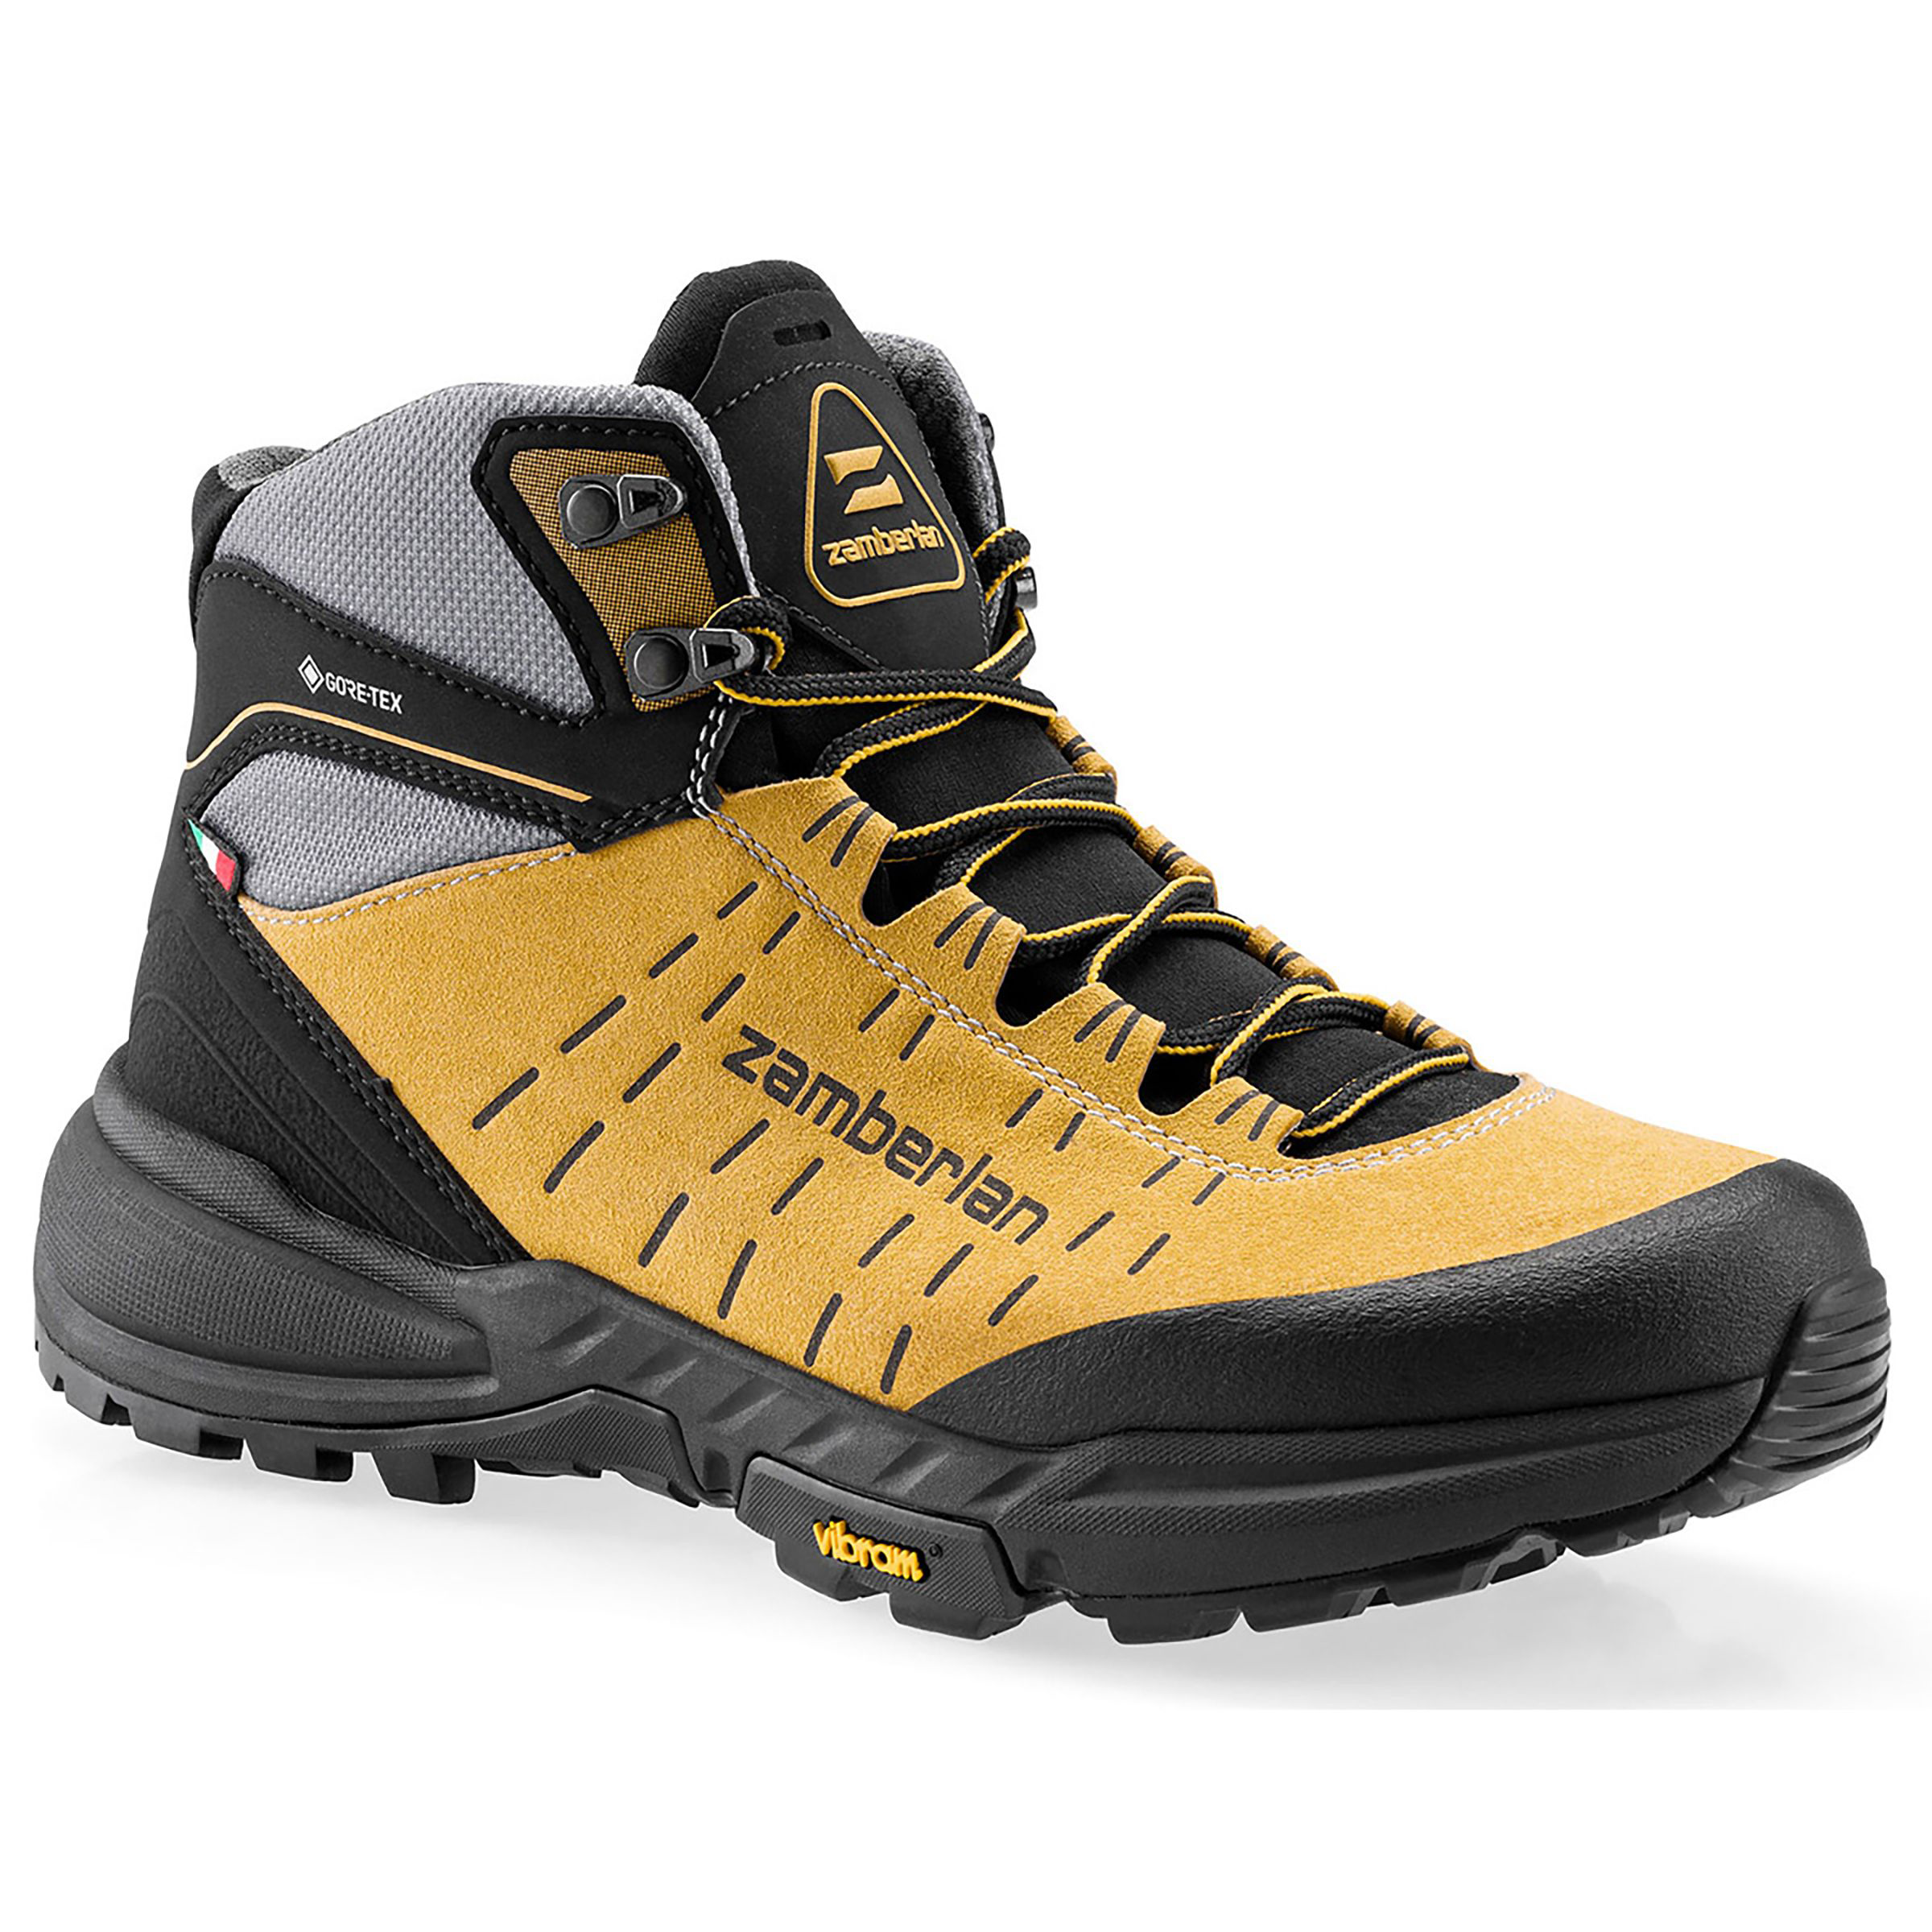 Zamberlan 334 Circe GTX Waterproof Hiking Boots for Ladies - Yellow - 11M